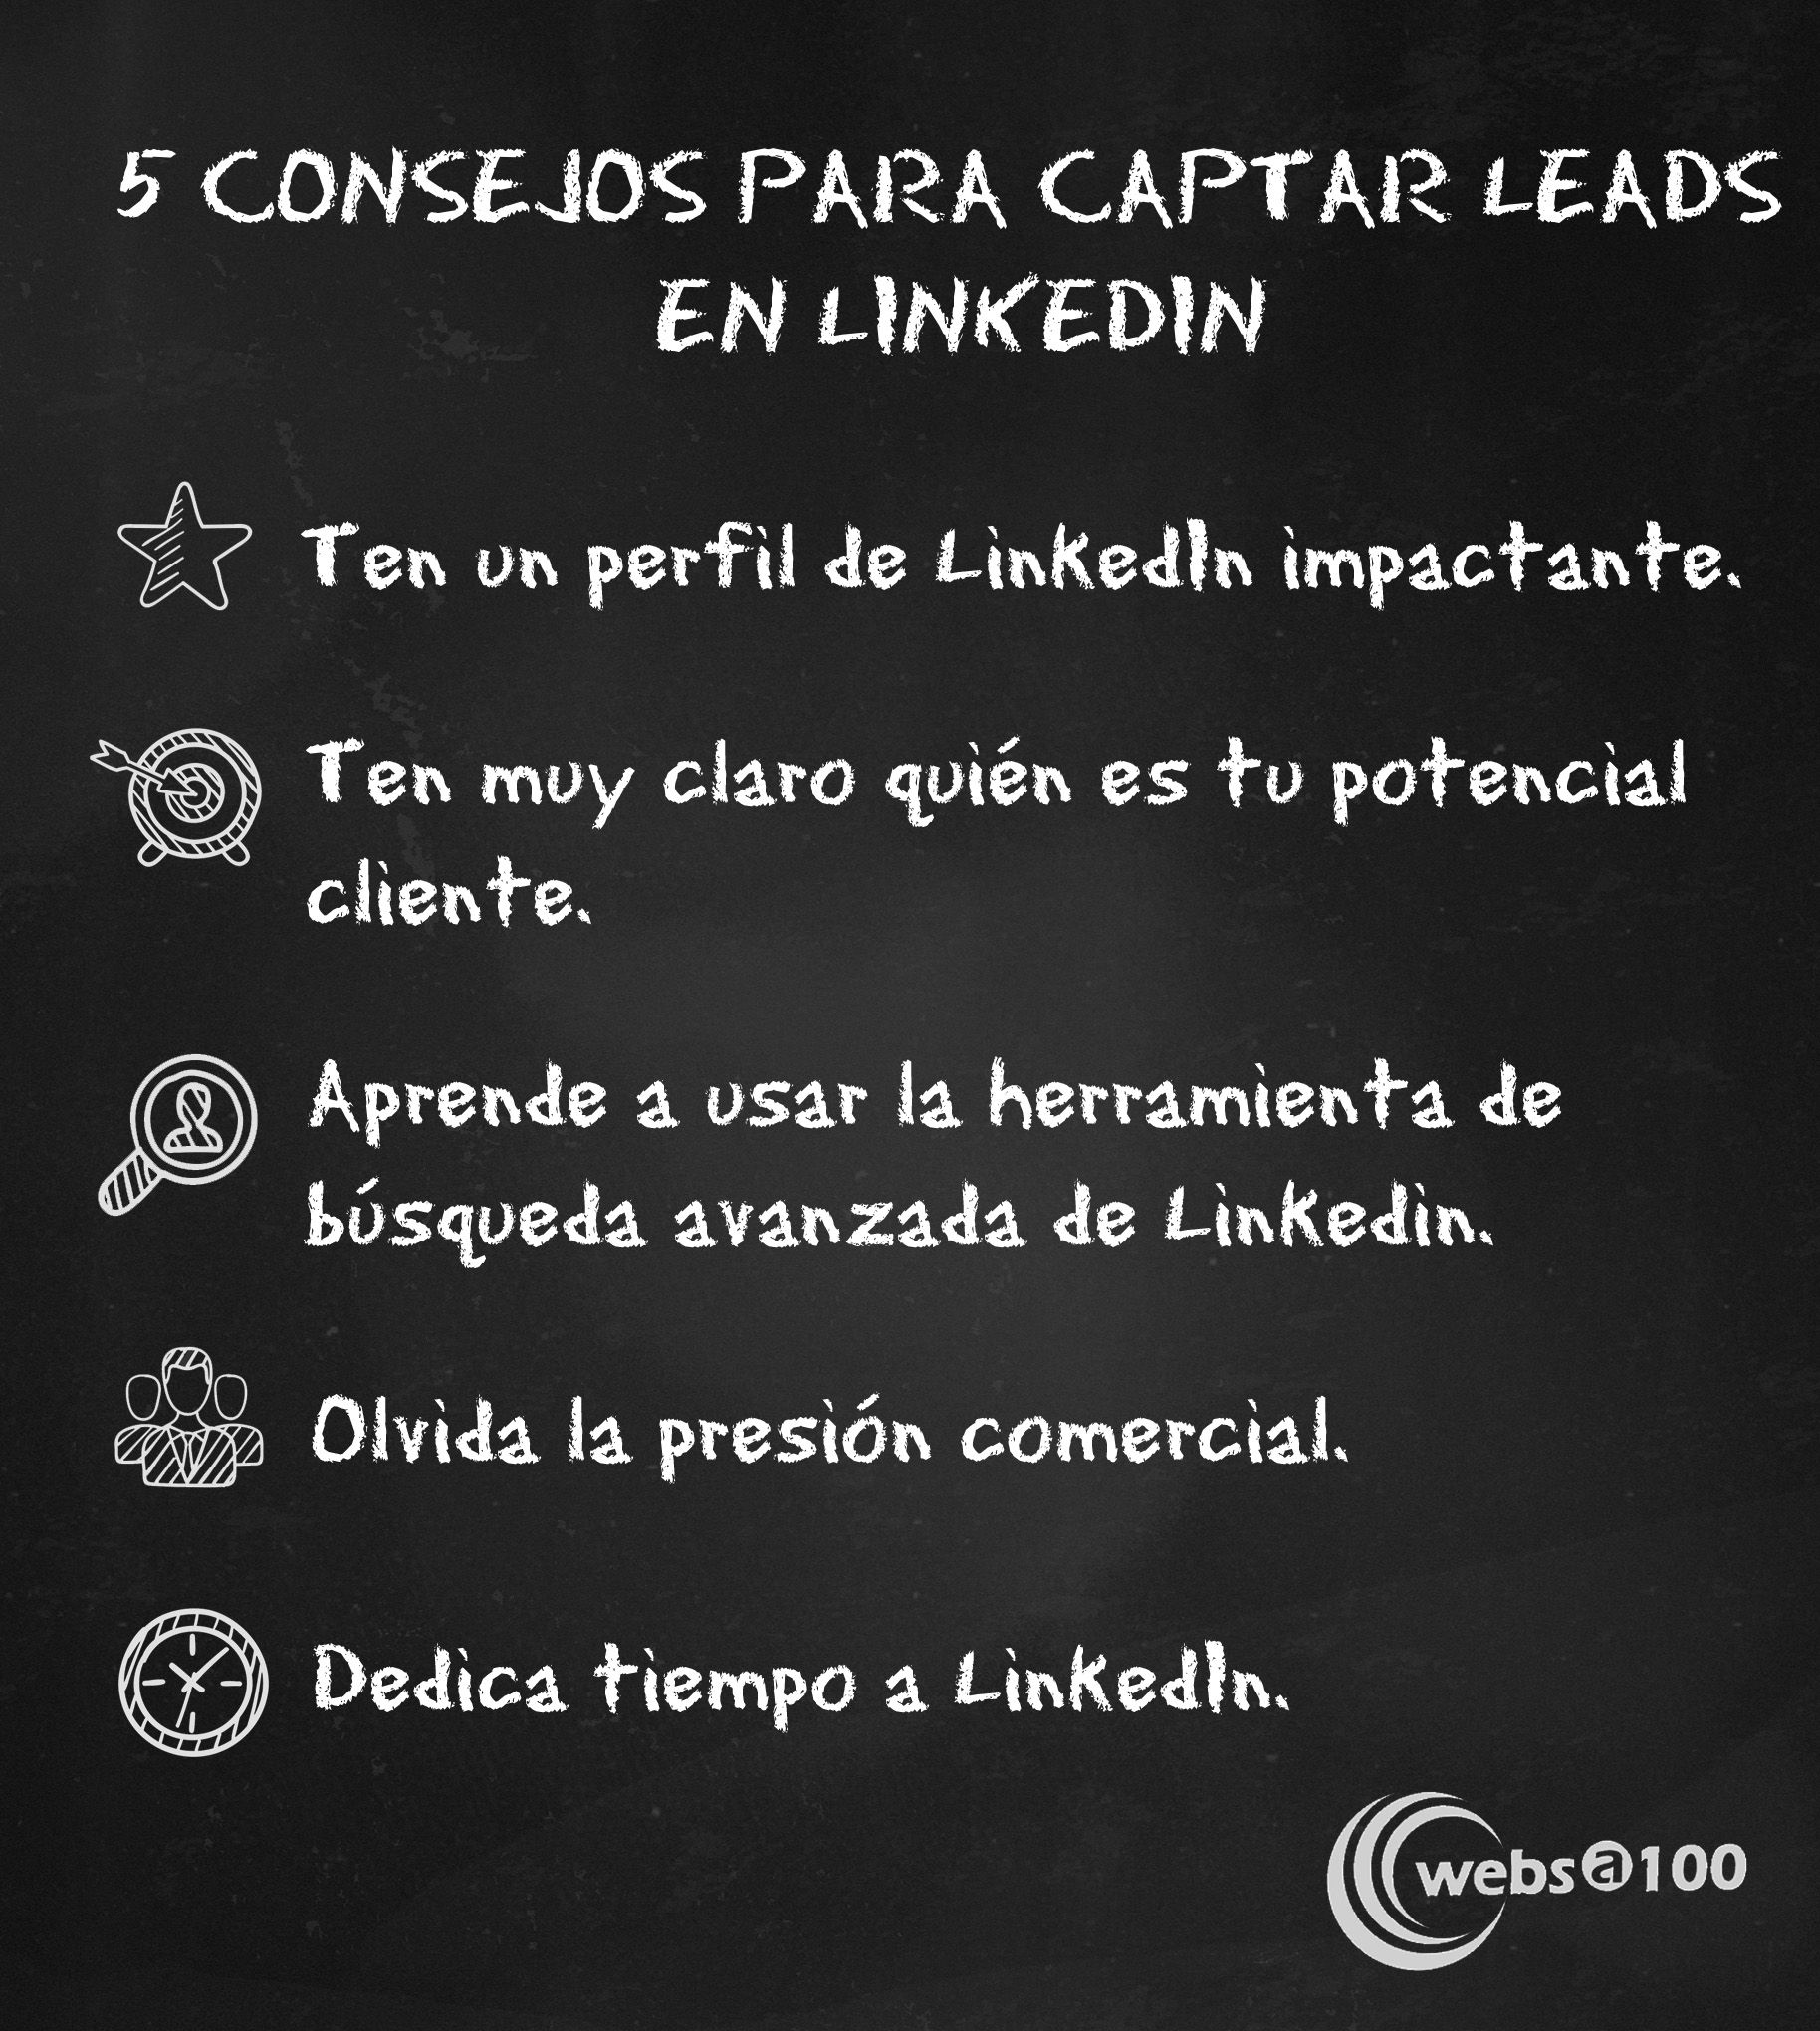 Consejos para captar leads en LinkedIn